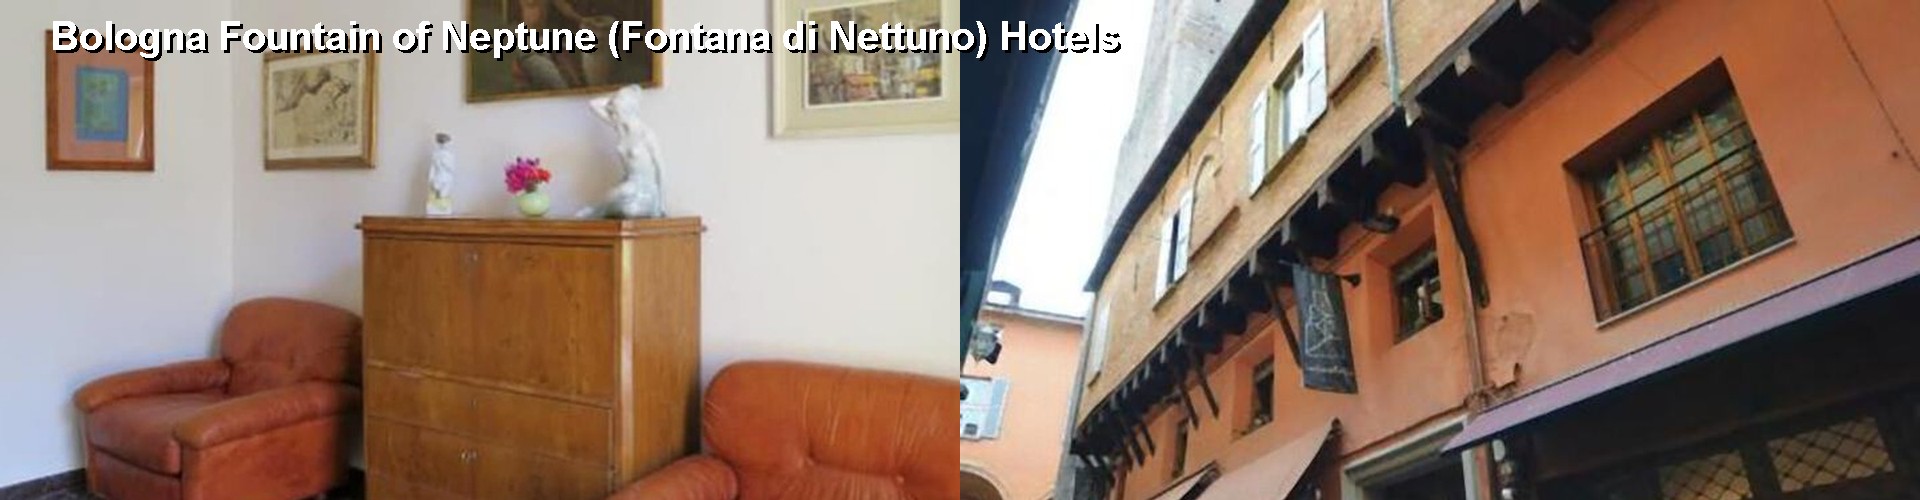 5 Best Hotels near Bologna Fountain of Neptune (Fontana di Nettuno)